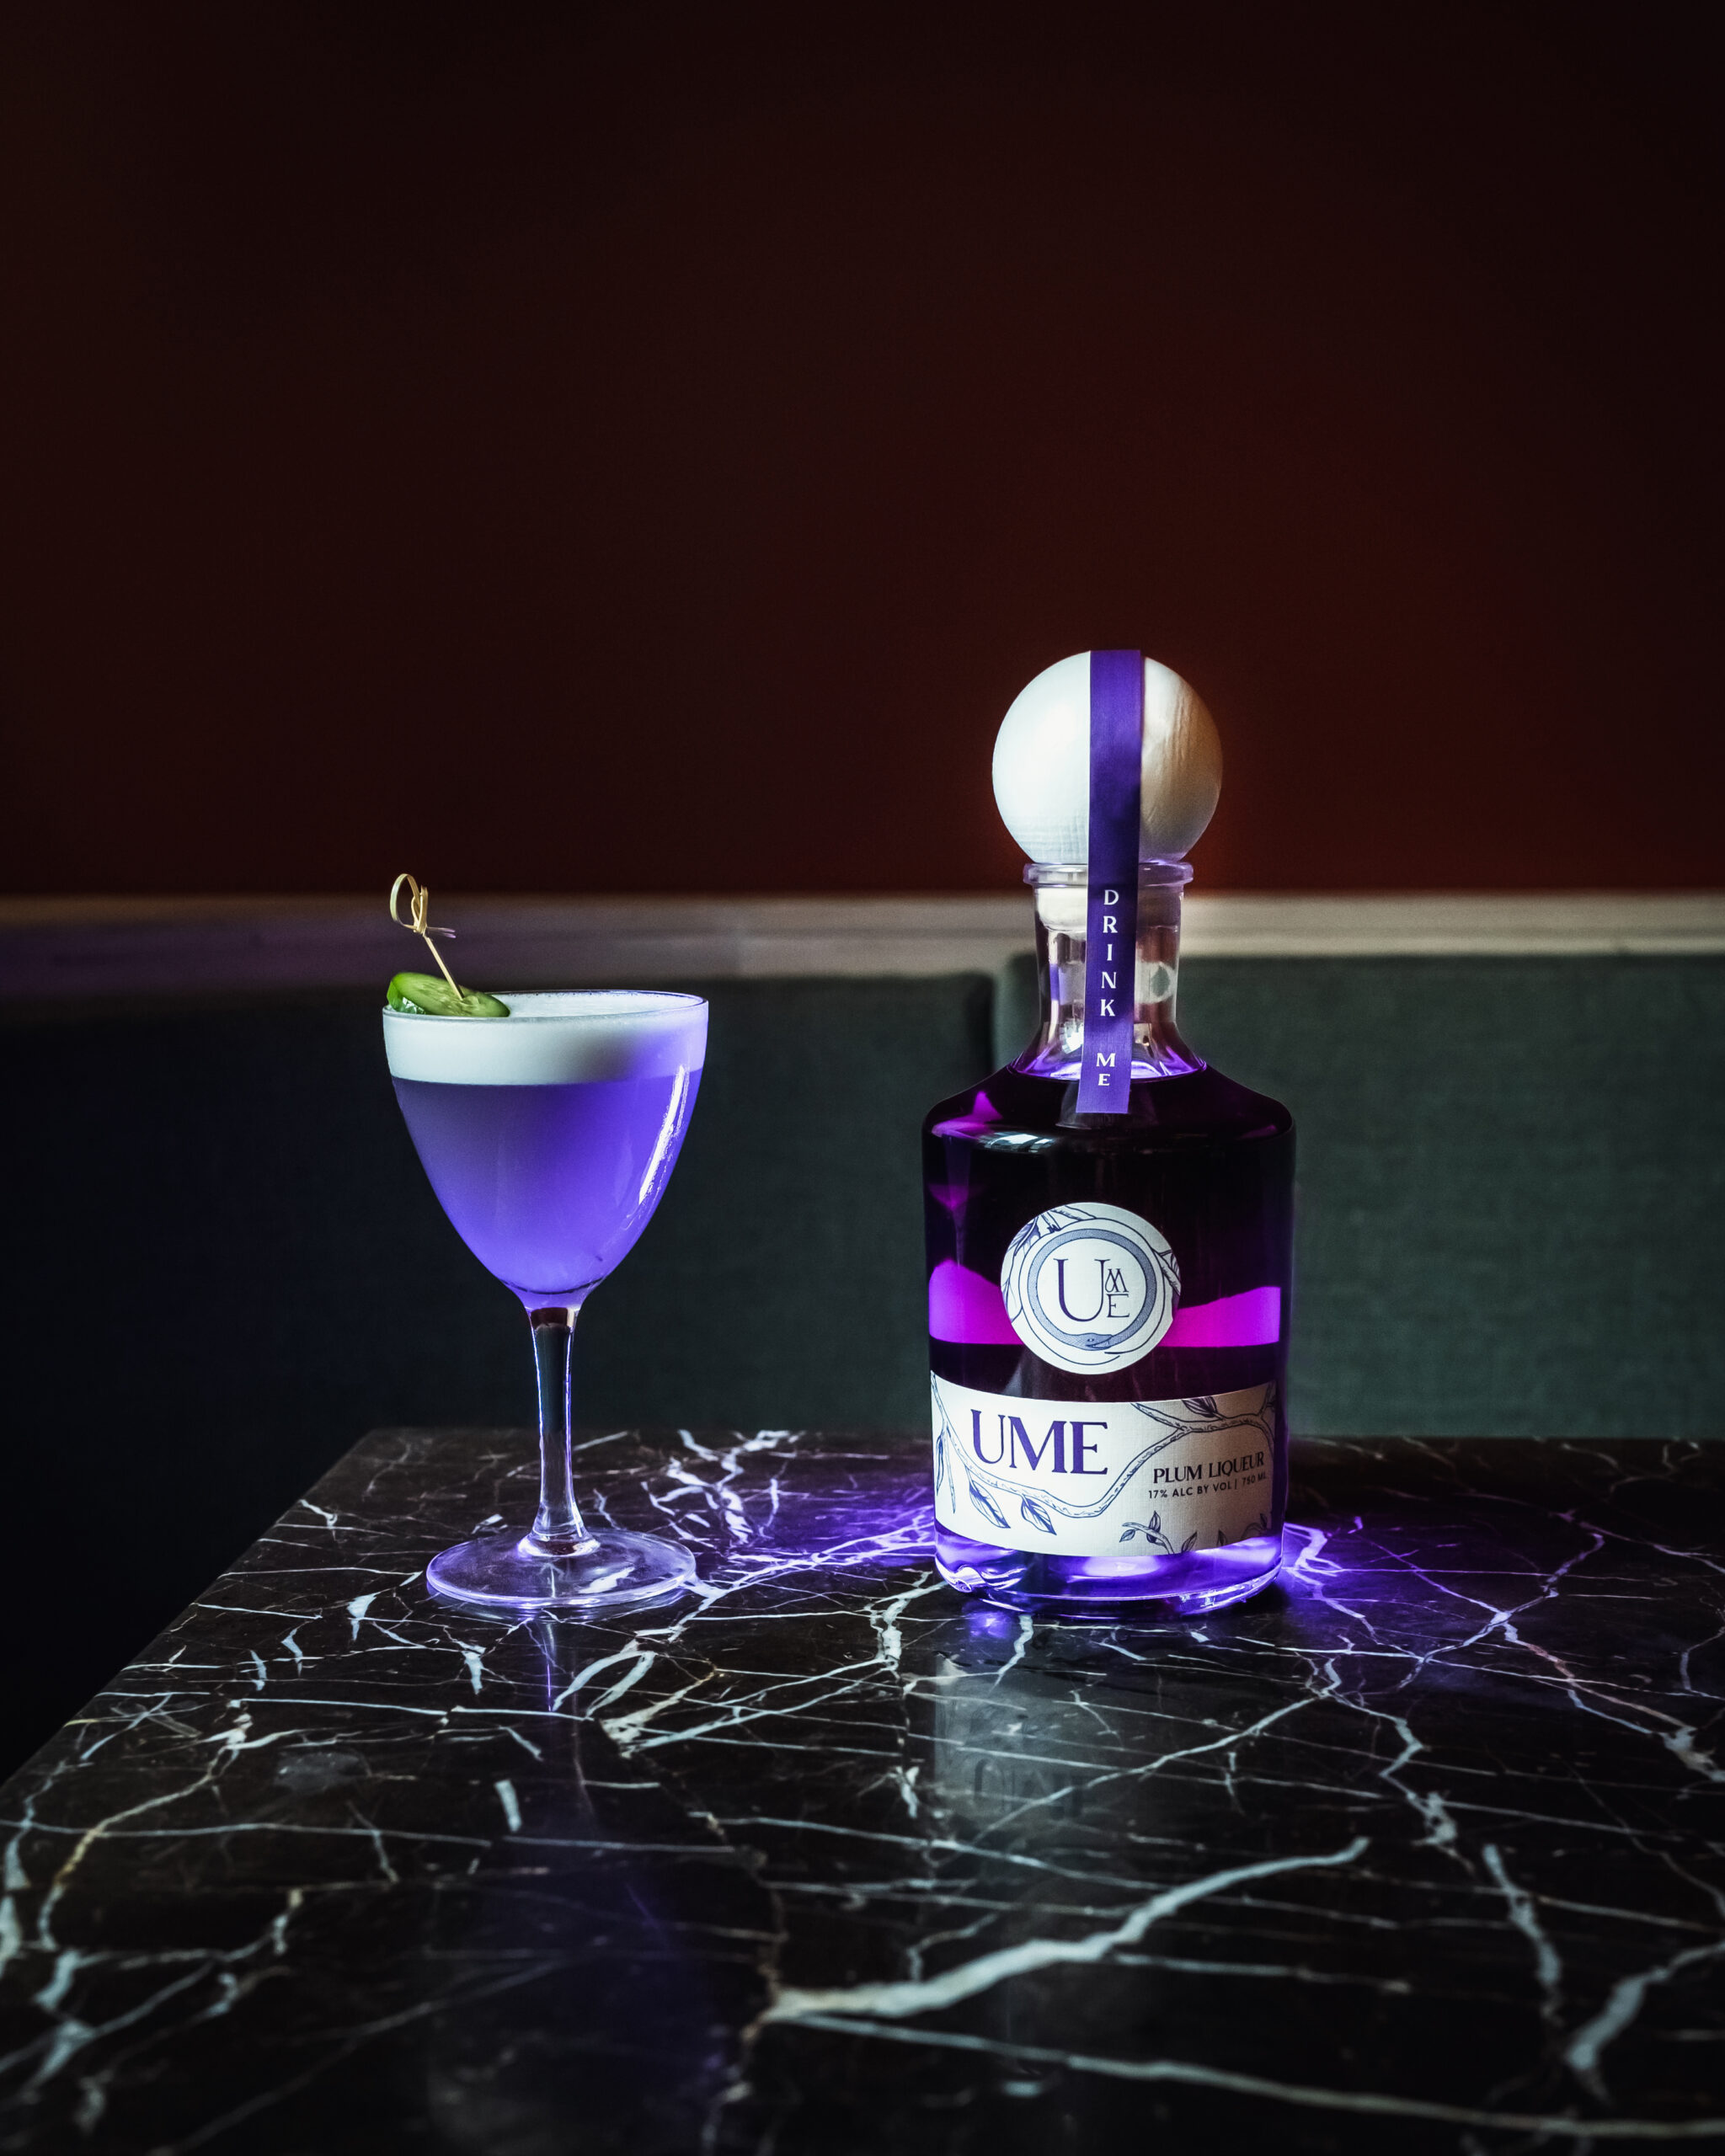 UME Plum Liqueur: A Purple Potion of Delightful Revelry and Distinctive Spirits